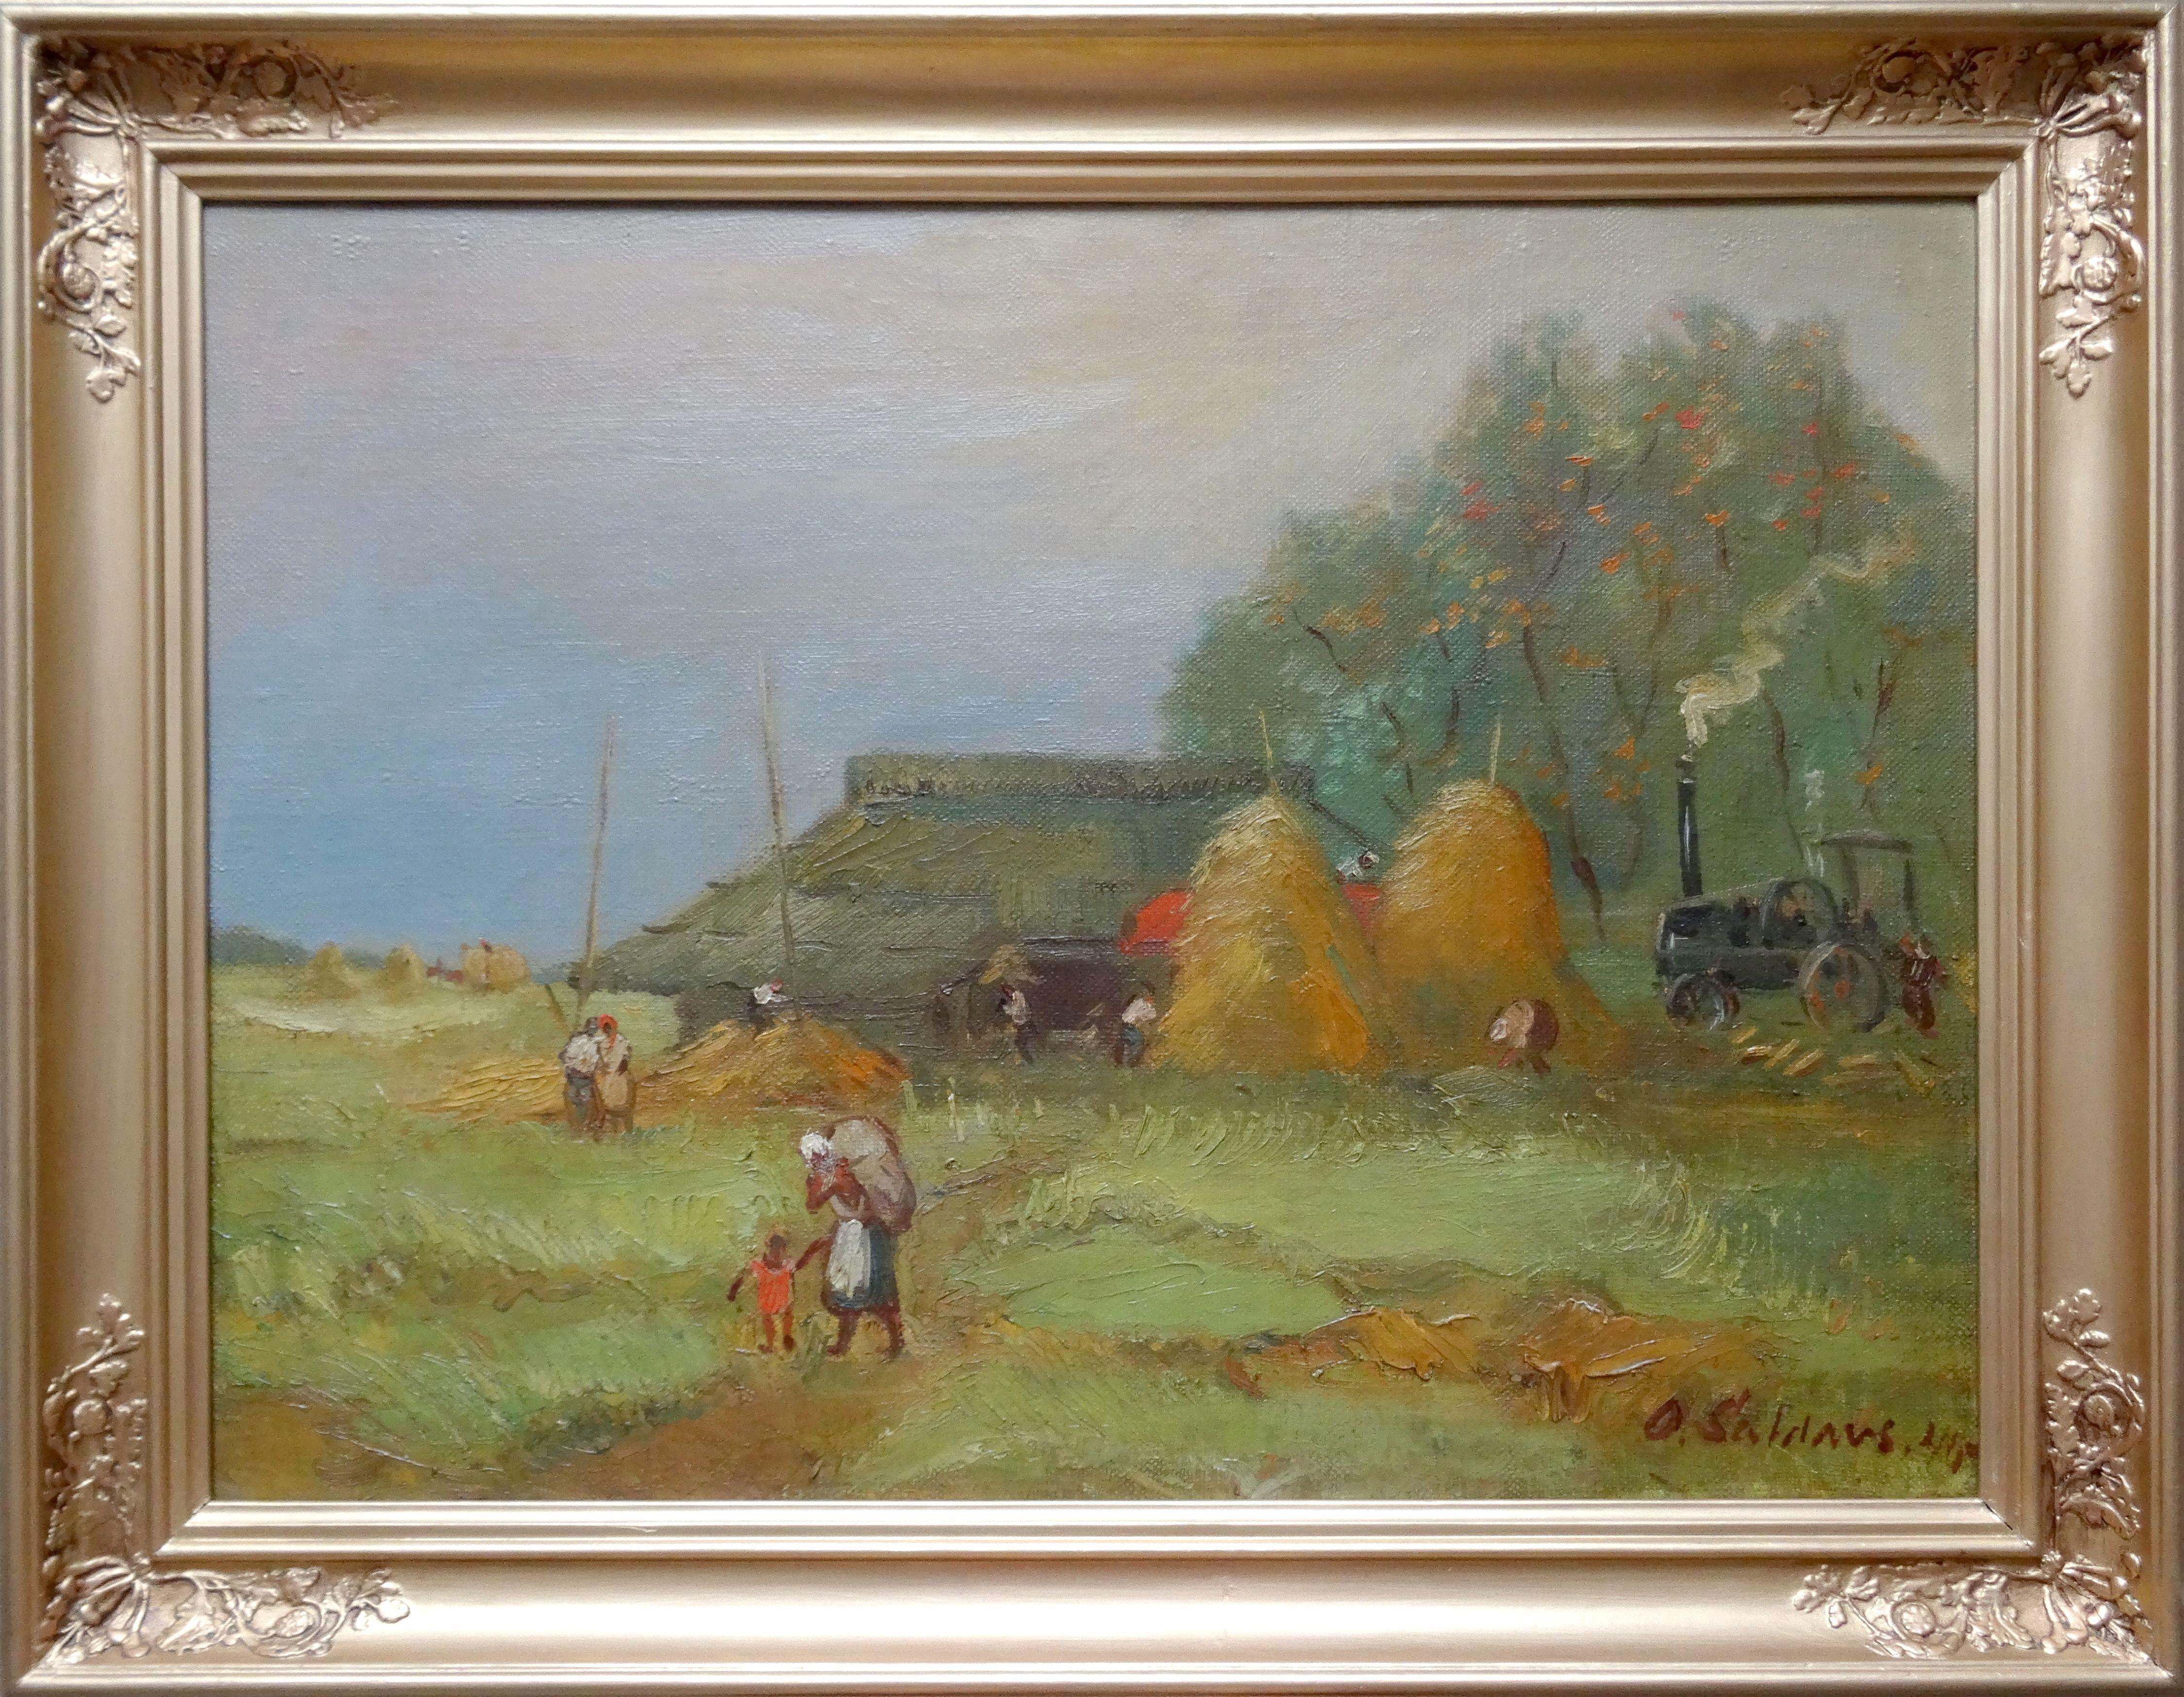 Threshing 1940. Canvas, oil. 54.5x73.5 cm - Painting by Saldavs Olgerts